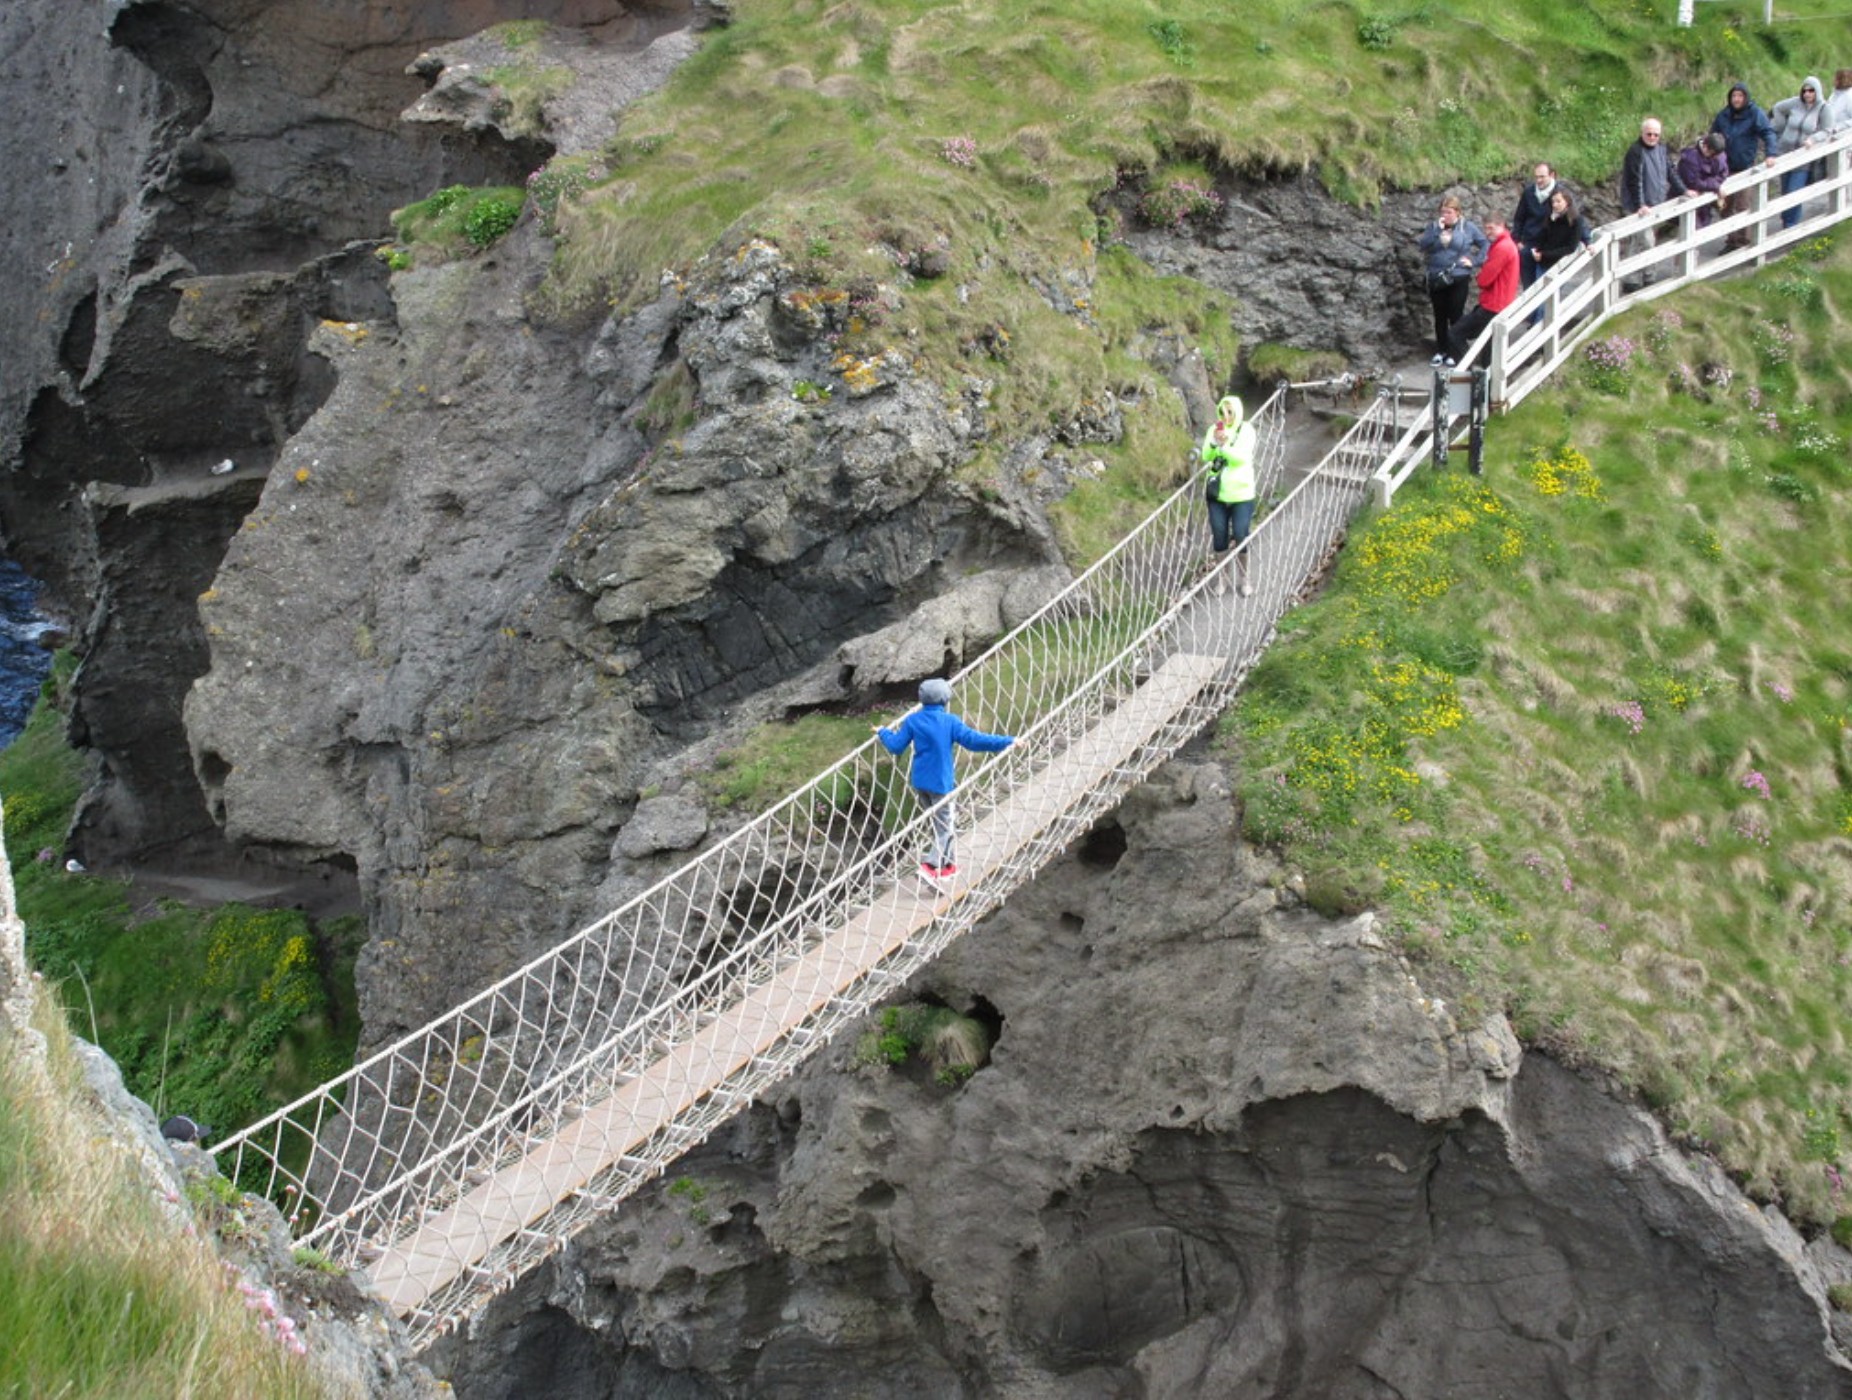 sentence types: people on a rope bridge traversing a ravine